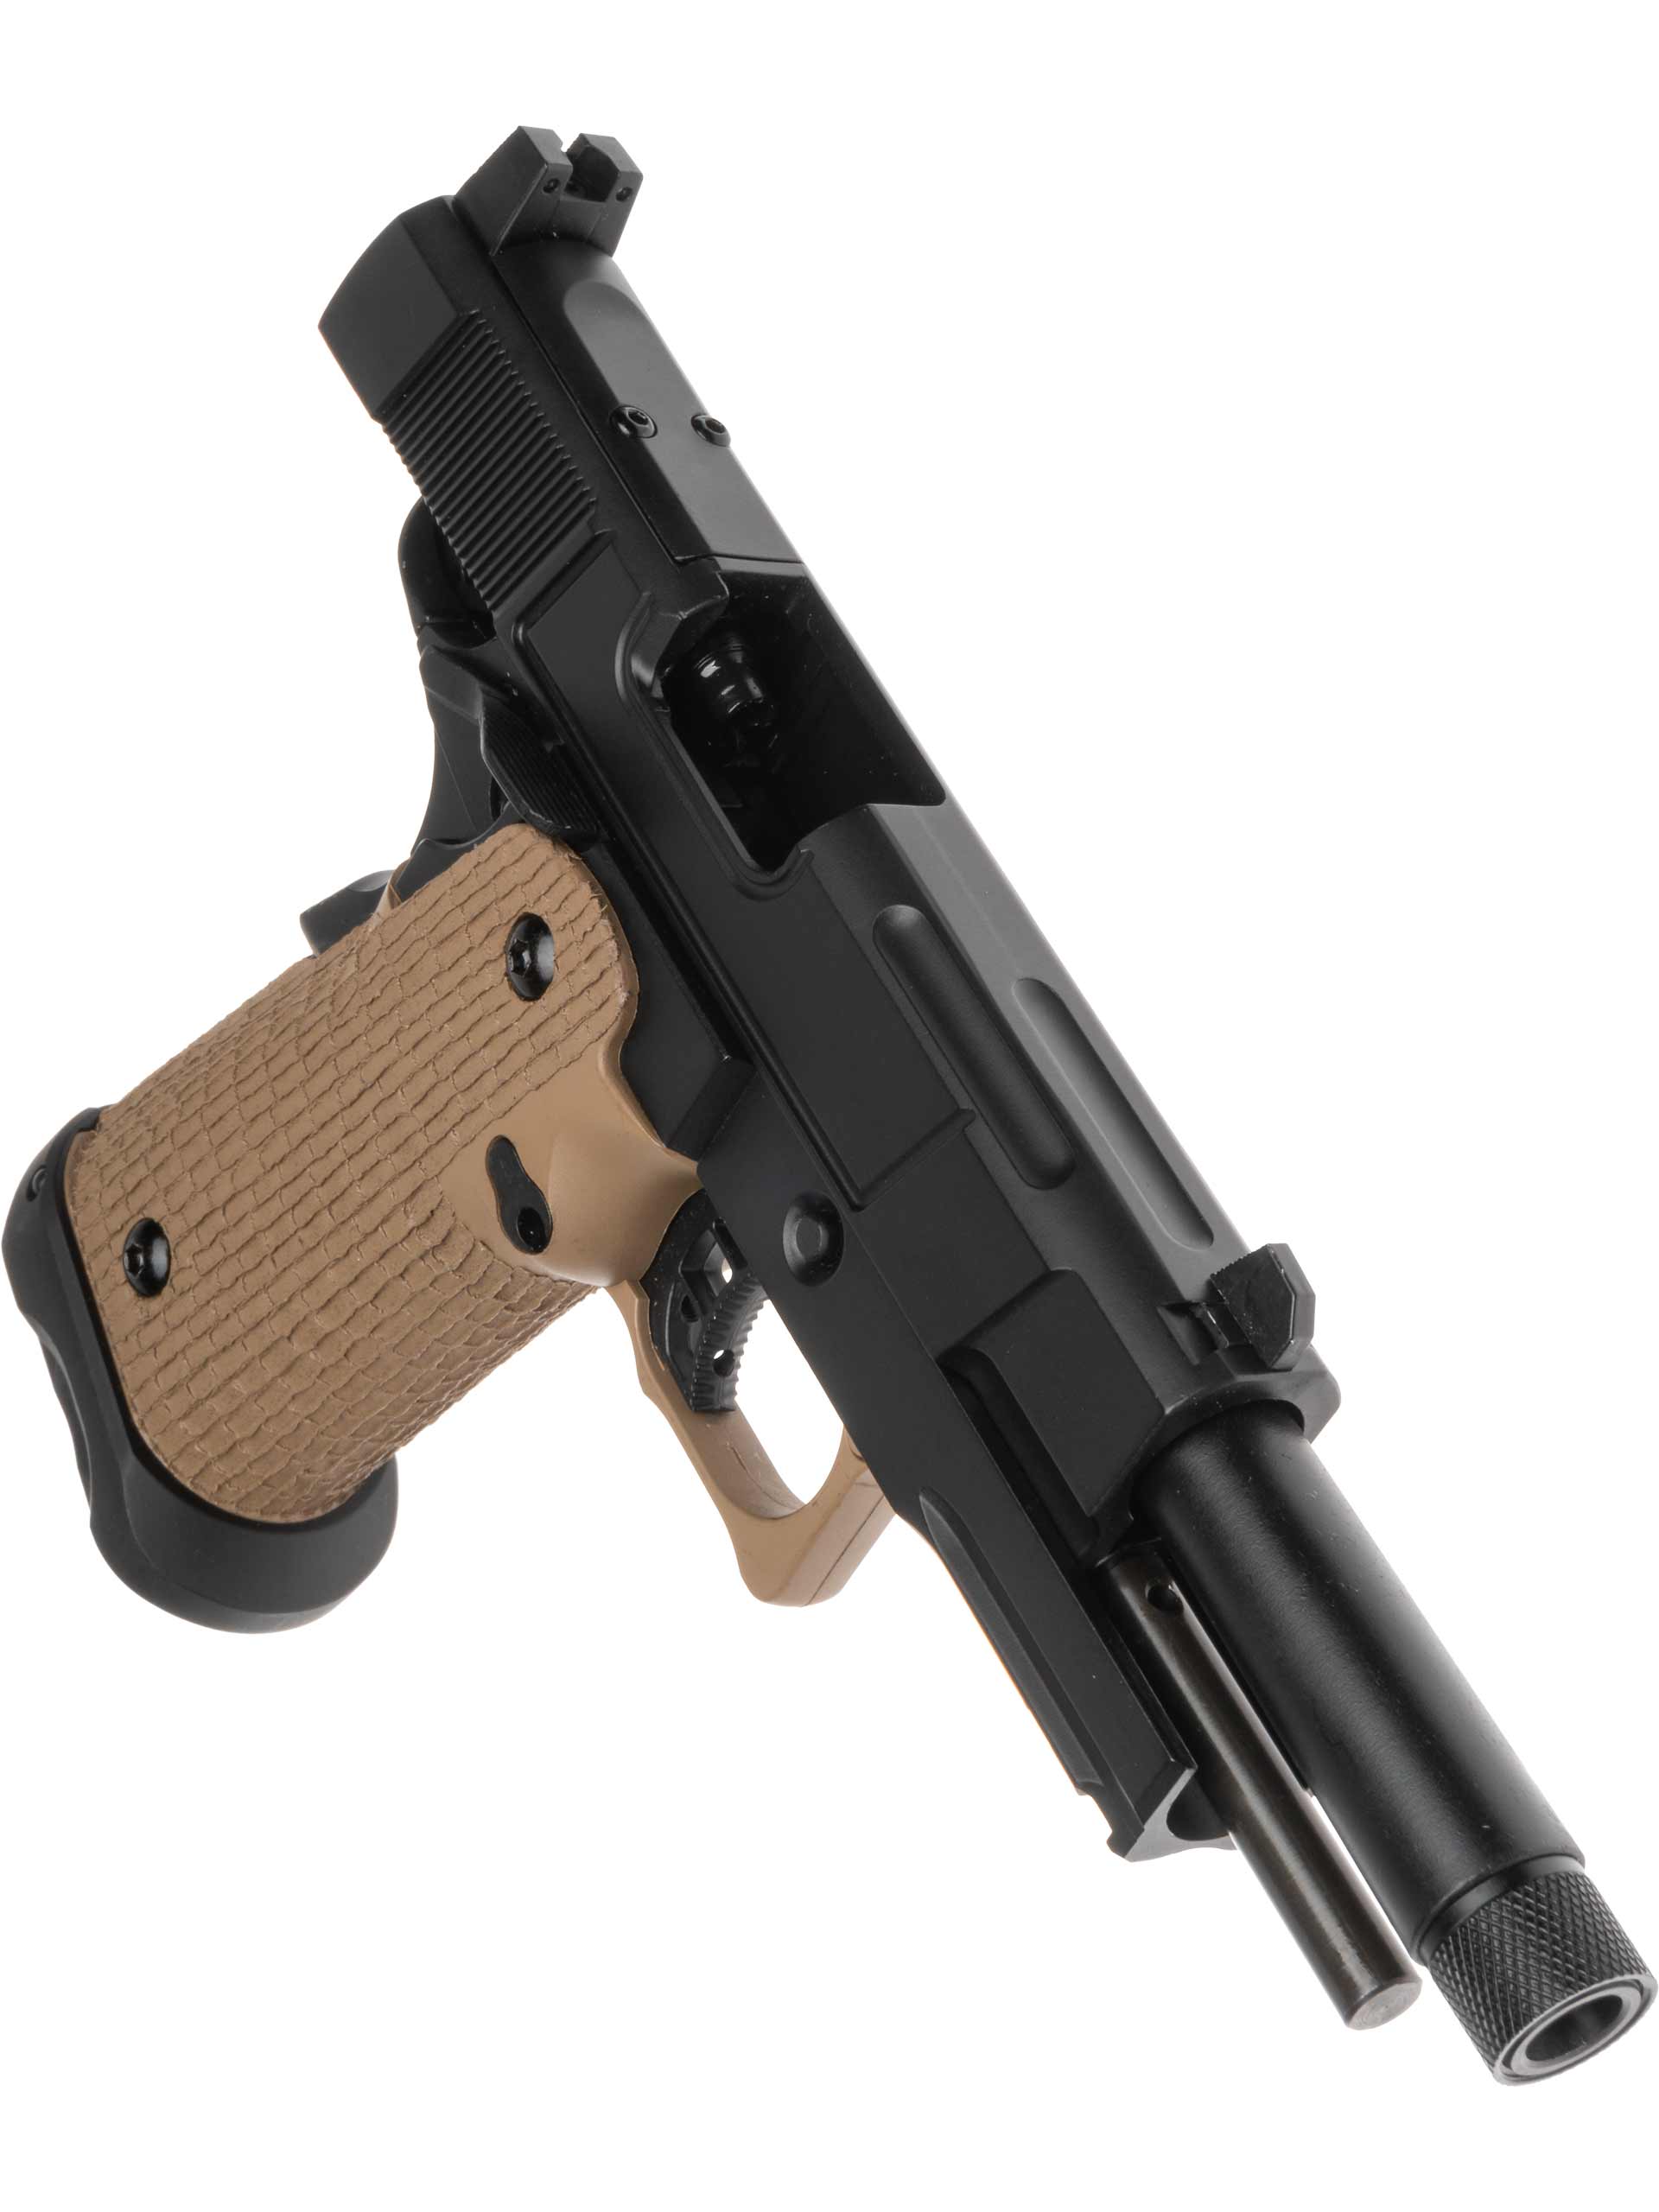 Army Armament R504 Hi-capa GBB Pistol